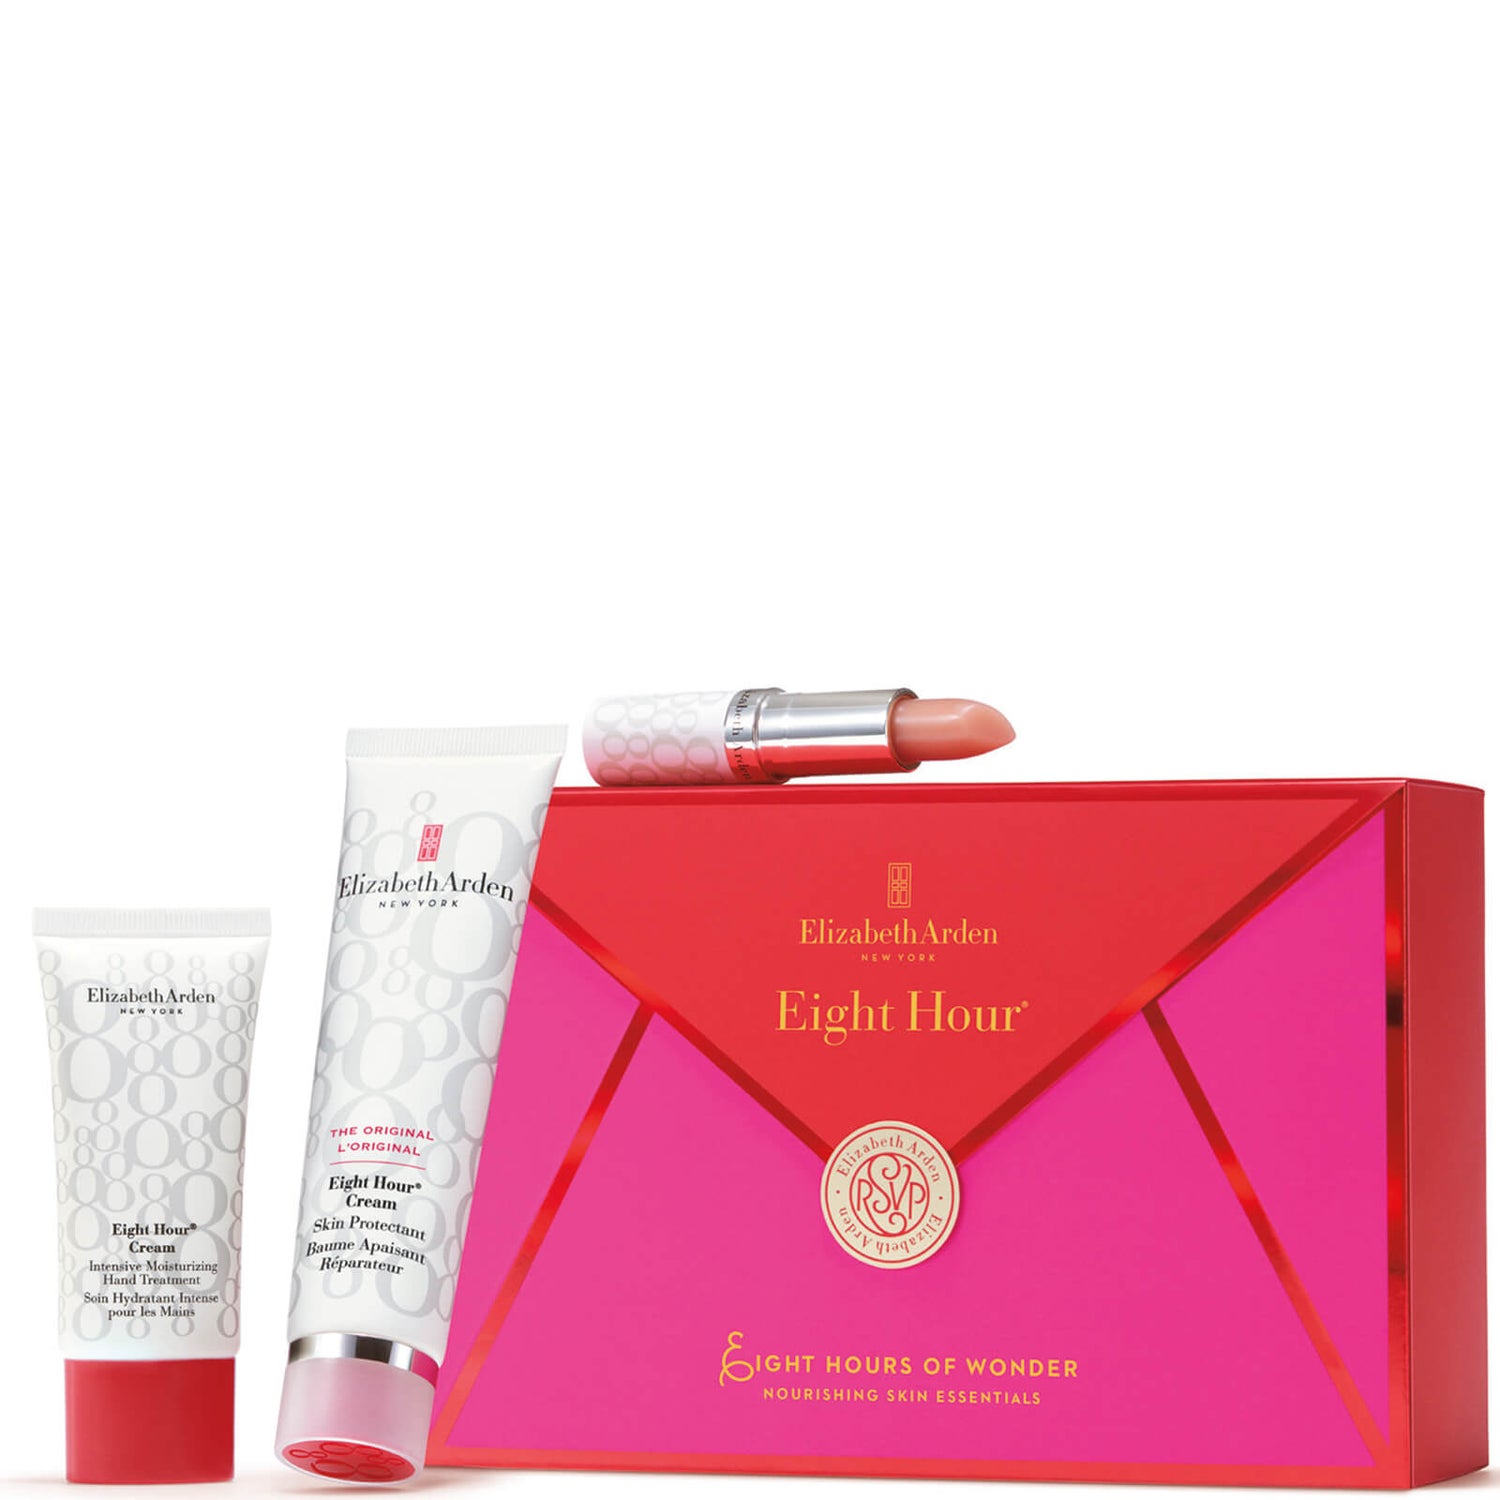 Elizabeth Arden Eight Hour Cream Skin Protectant, Original, 3 Piece Skin Care Gift Set - Worth $58.00